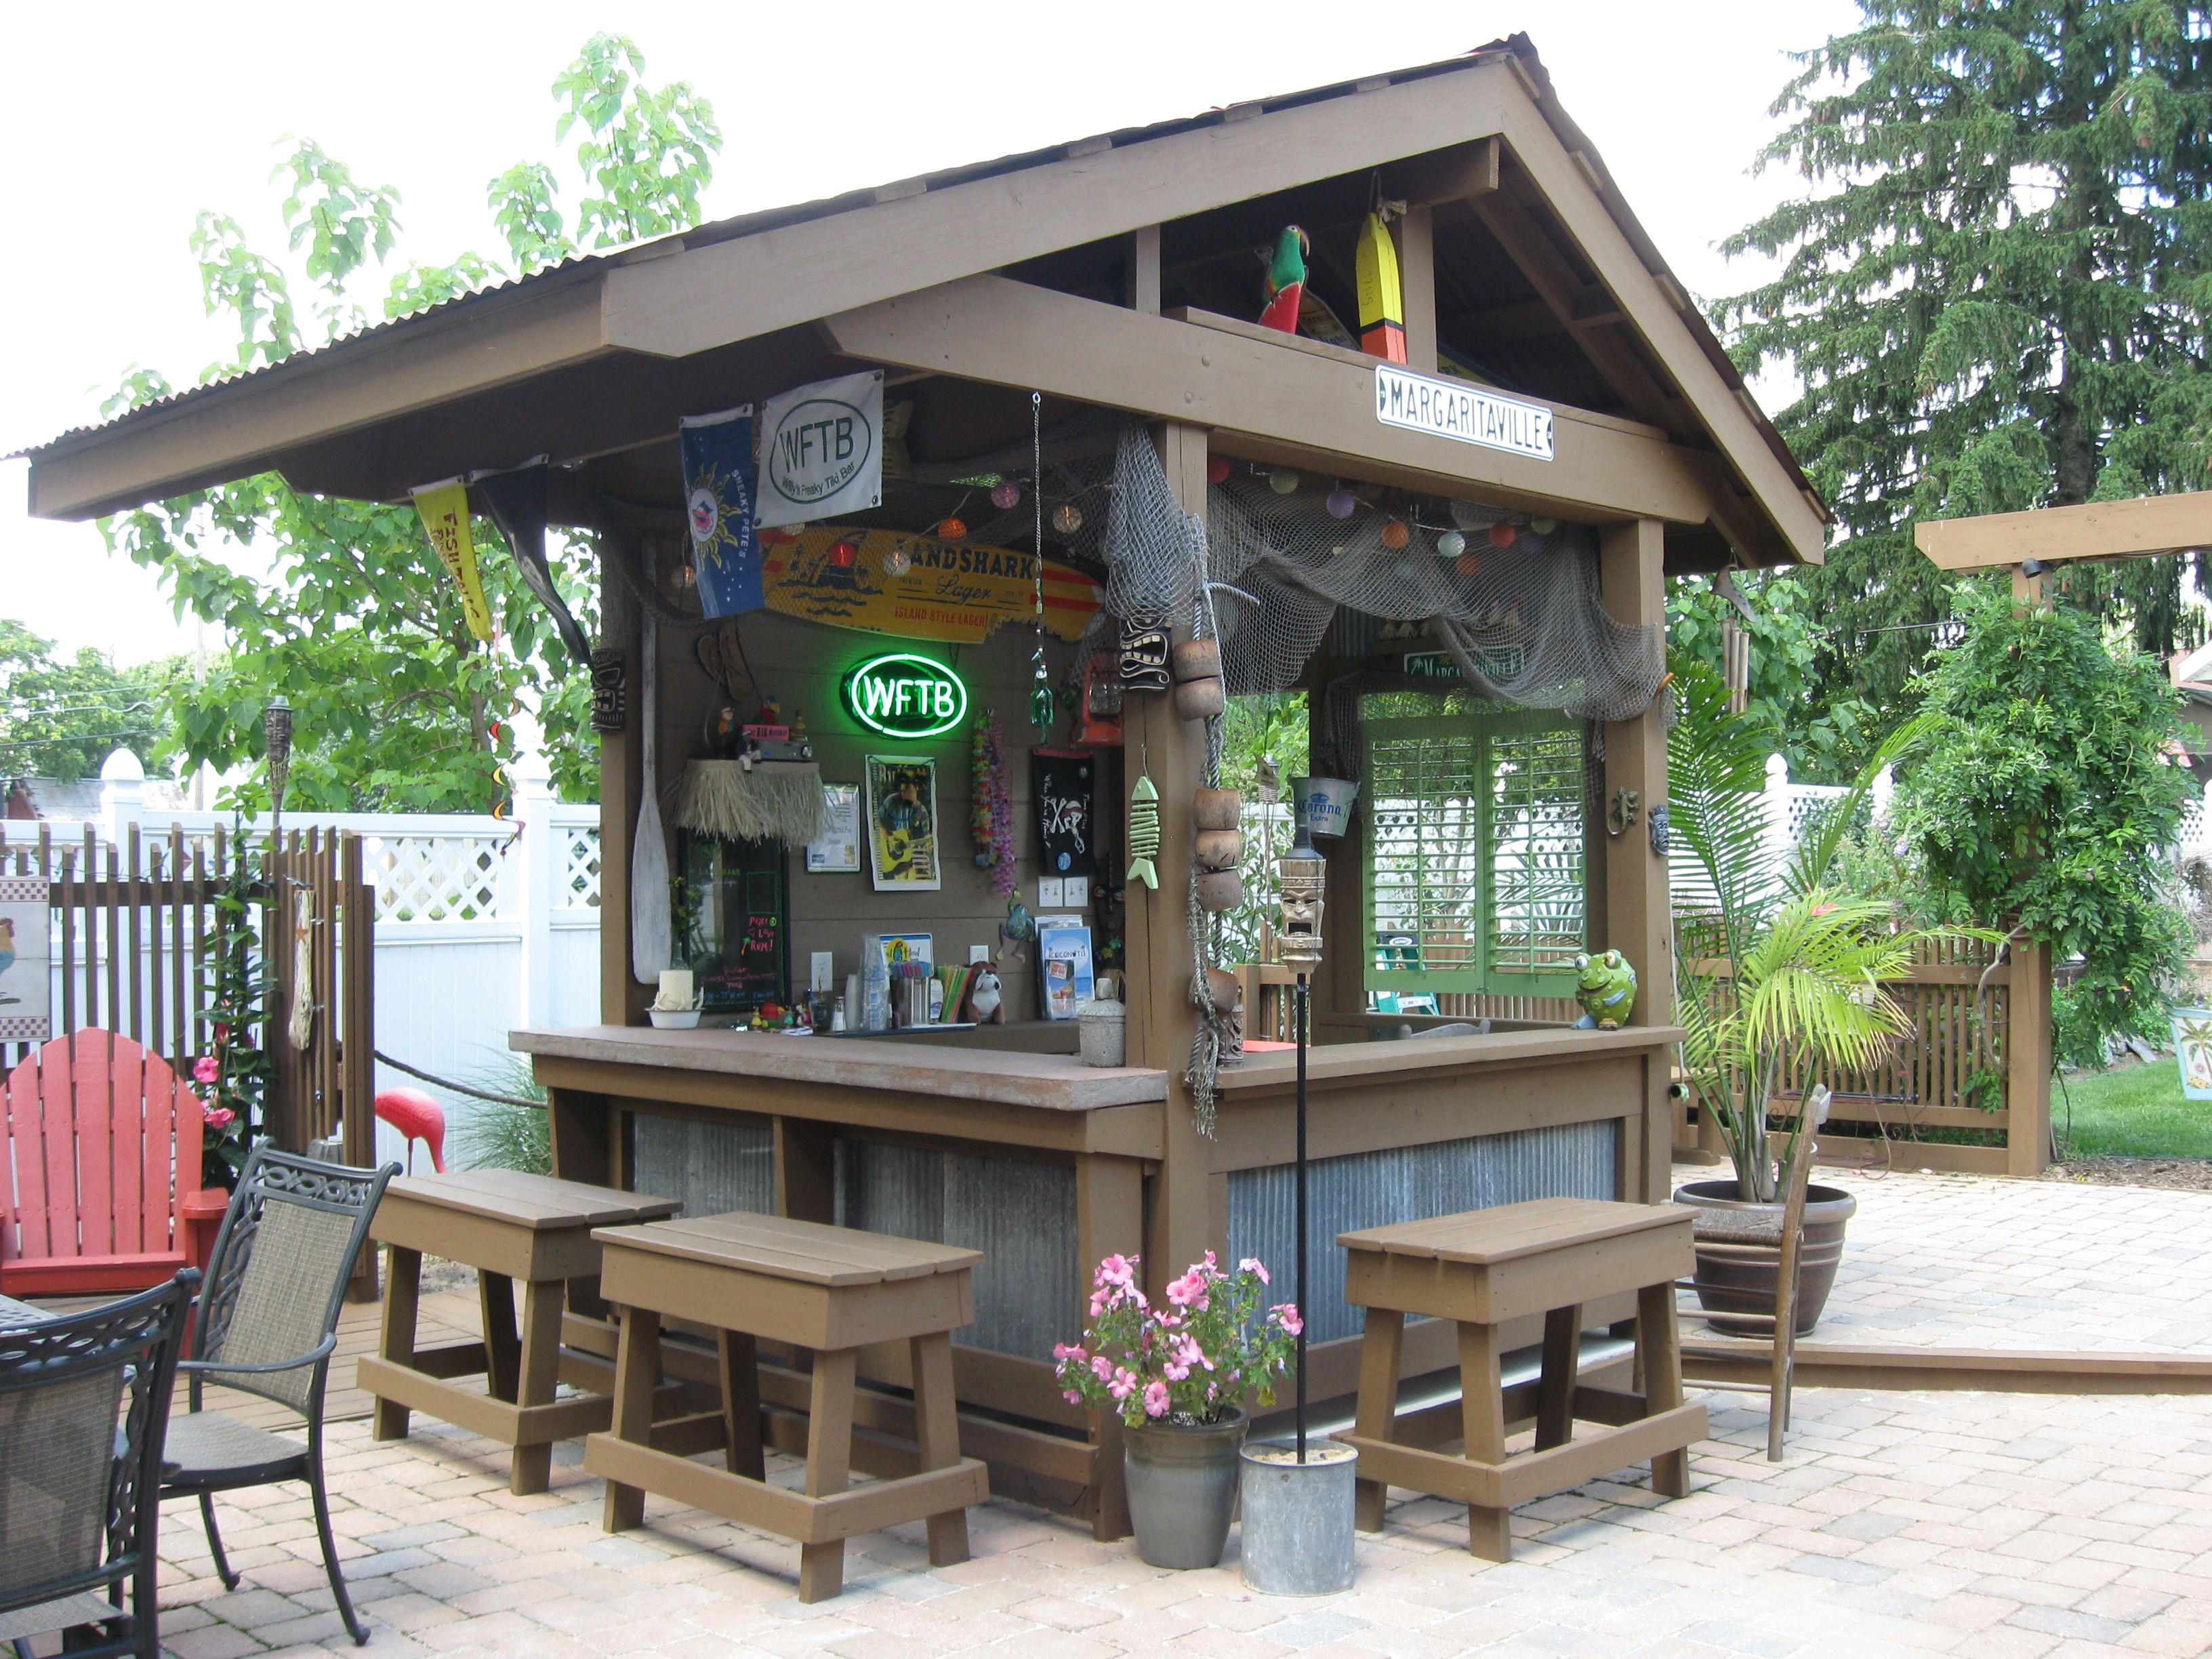 Best ideas about Backyard Bar Ideas
. Save or Pin My backyard tiki bar Outdoor kitchen Now.